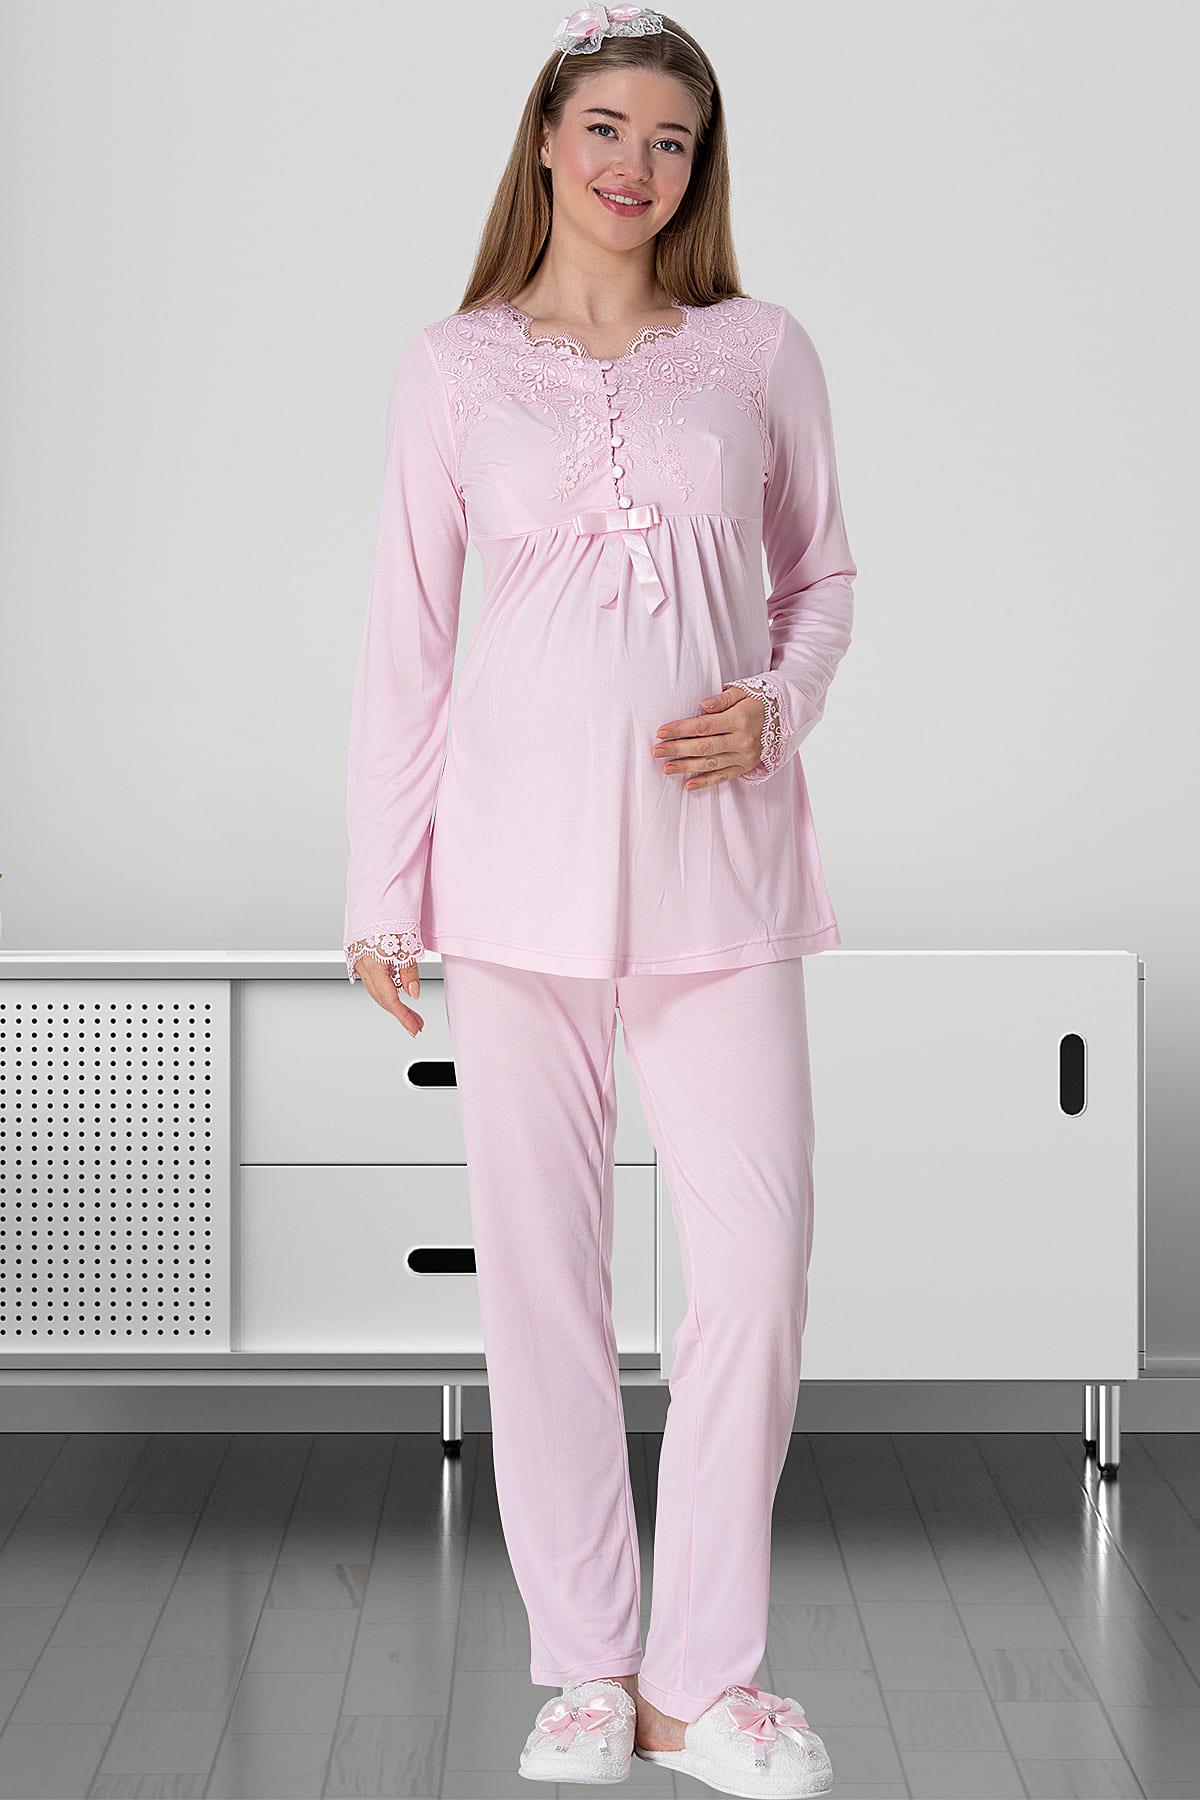 Shopymommy 5416 Elegant Lace 3-Pieces Maternity & Nursing Pajamas With Robe Pink